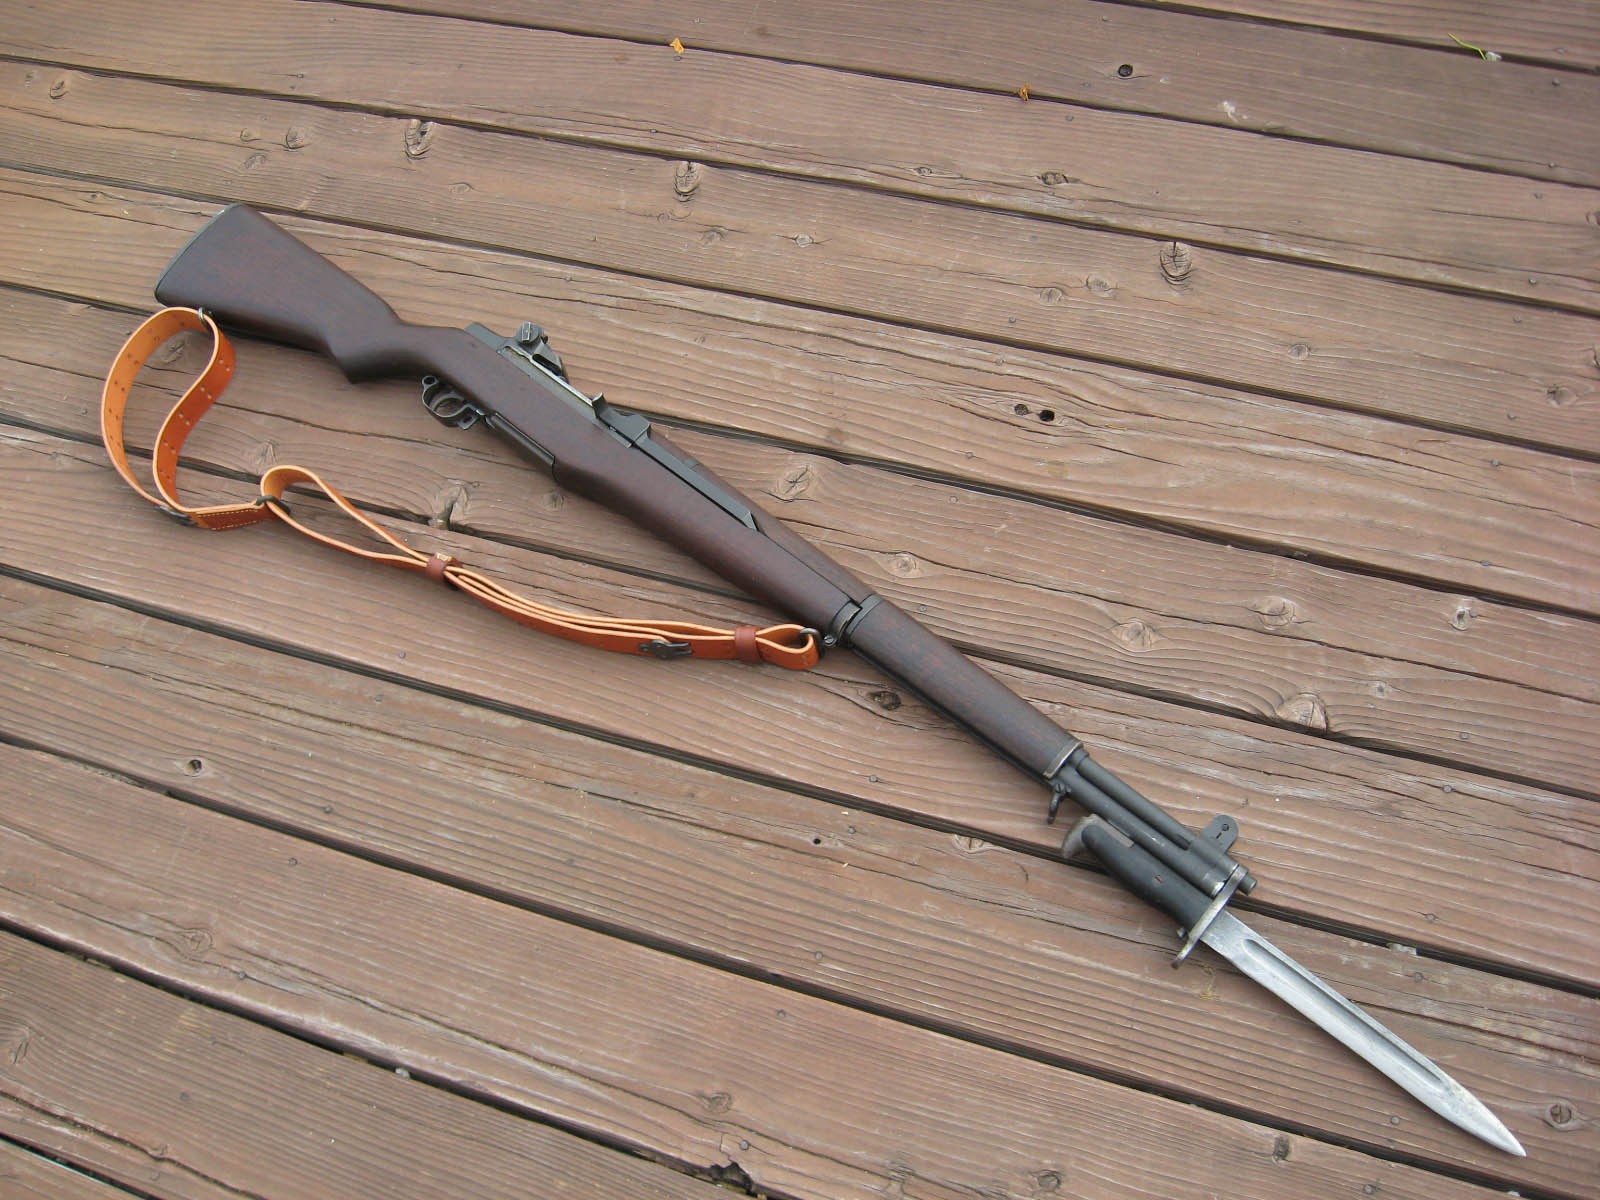 General 1600x1200 bayonet M1 Garand weapon rifles wooden surface American firearms